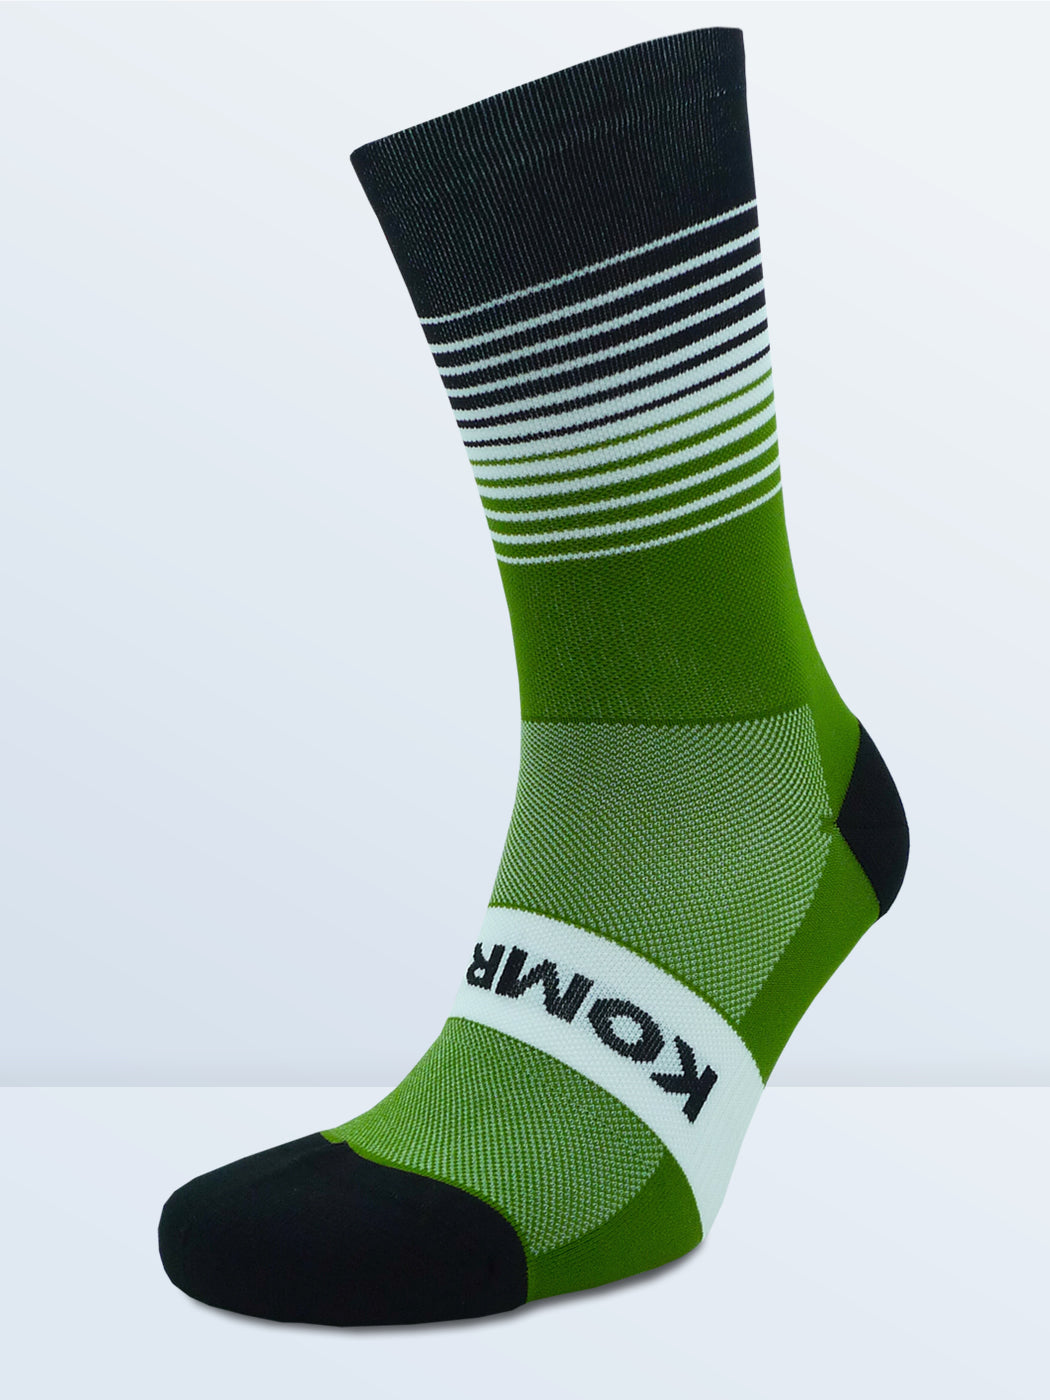 Swagger Socks - Olive Green & Black